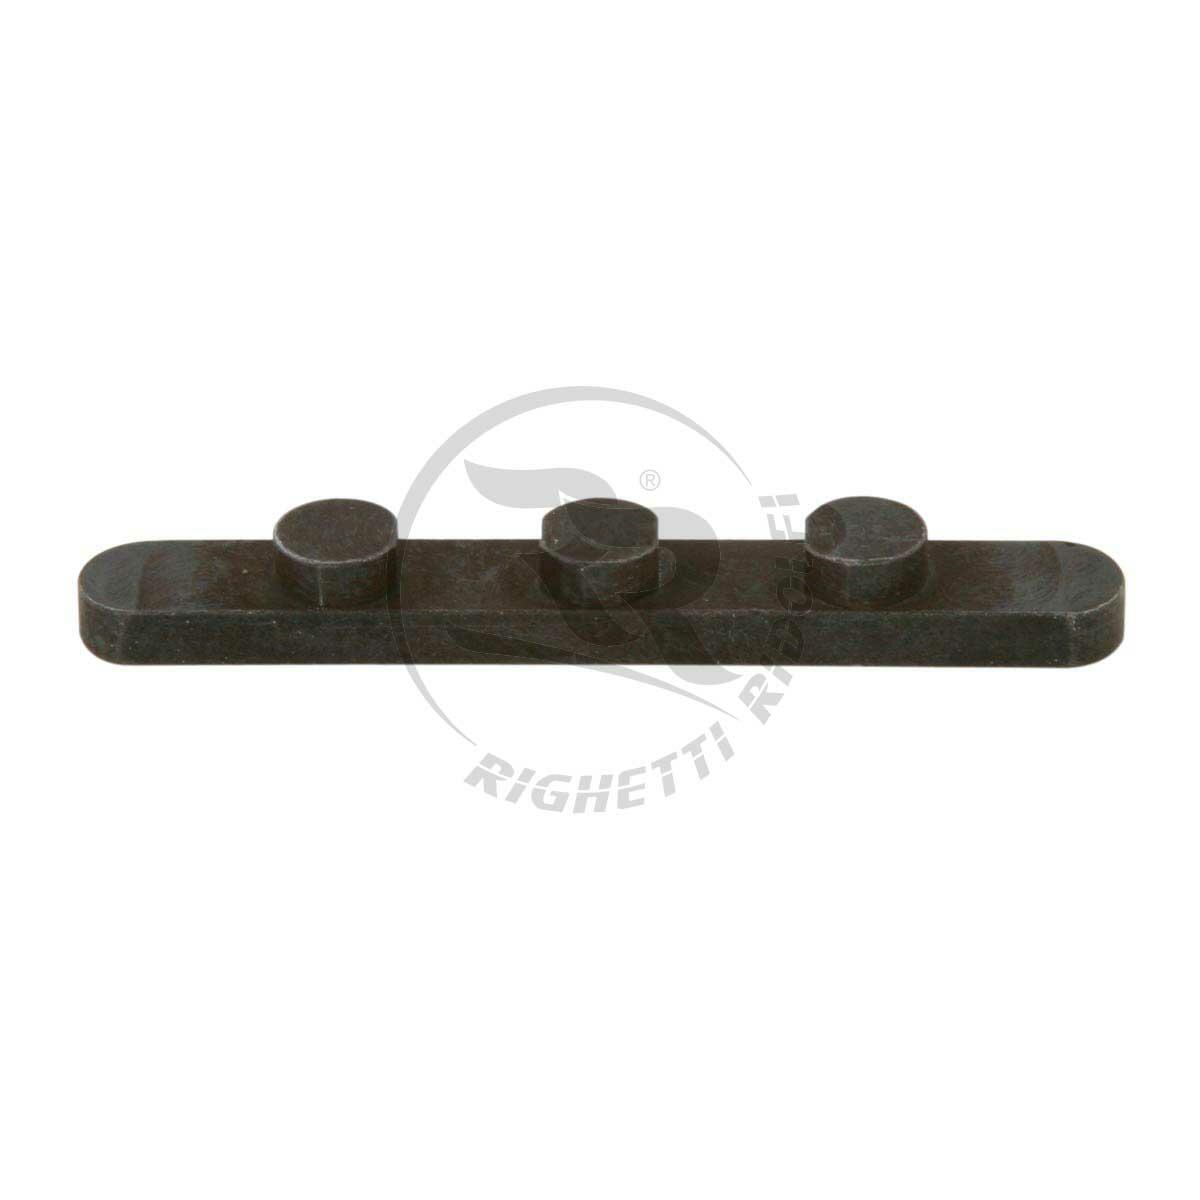 Axle Key 3 Peg Type 15mm Righetti K959